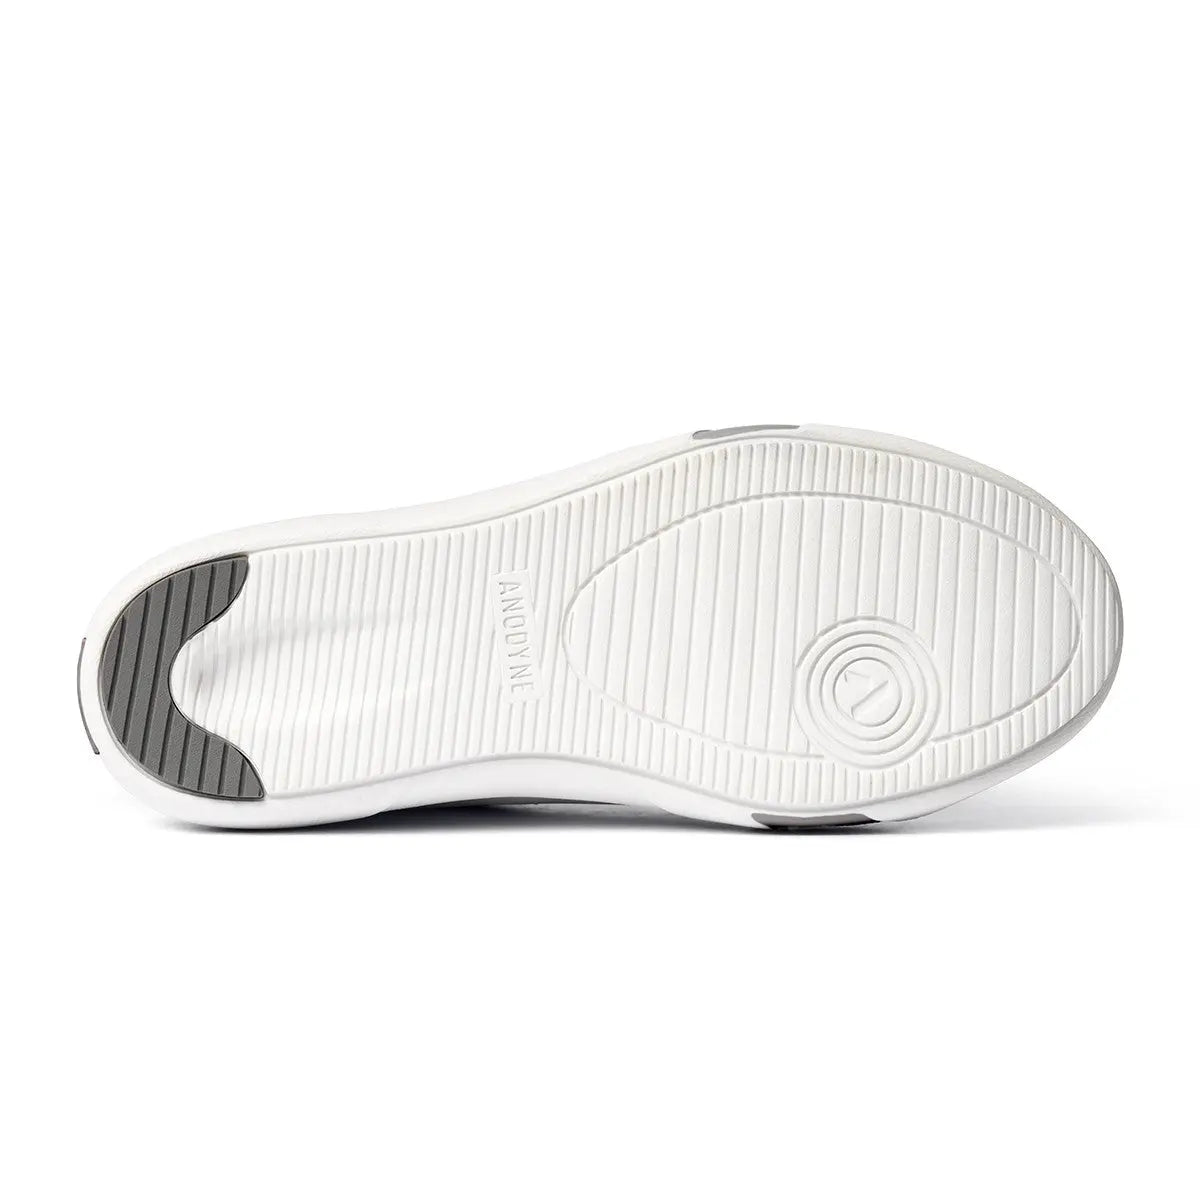 Anodyne Women's No.27 Casual Sneaker, White light weight sole 